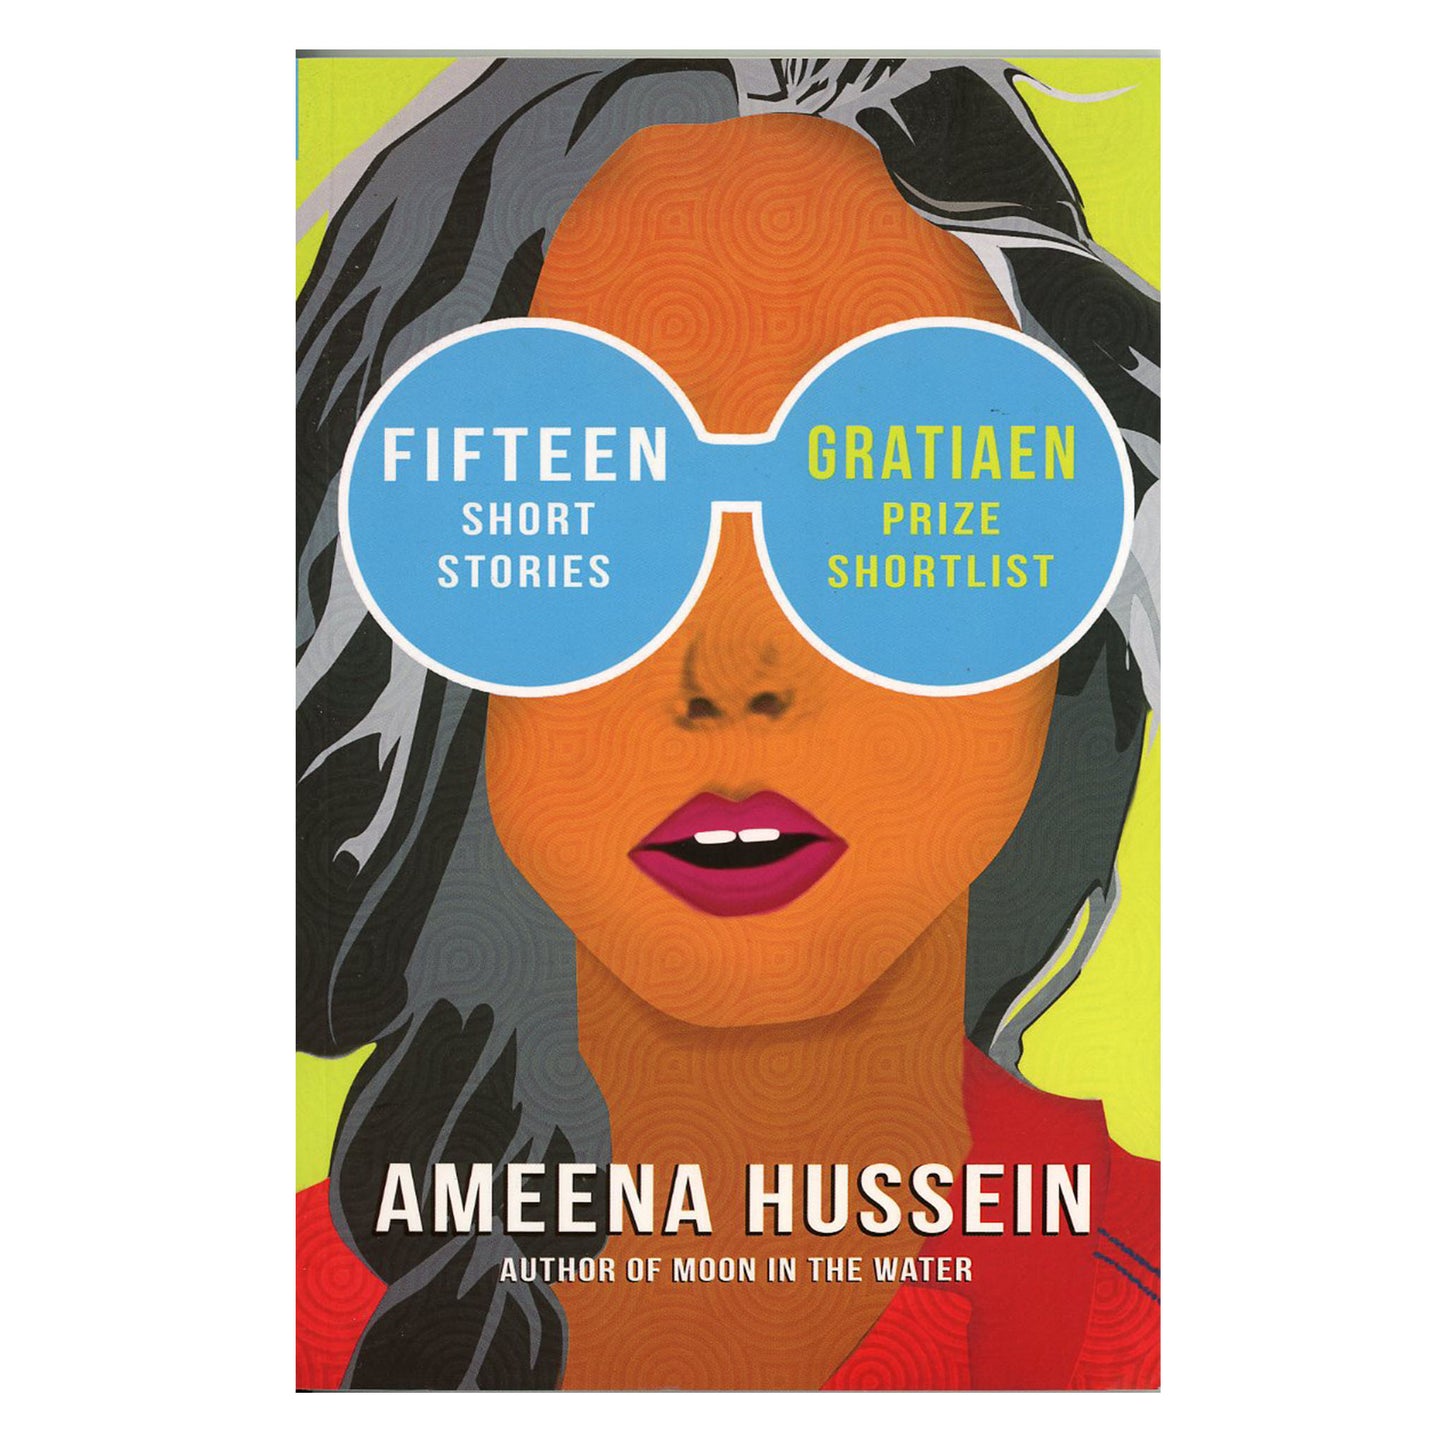 FIFTEEN Short Stories by Ameena Hussein